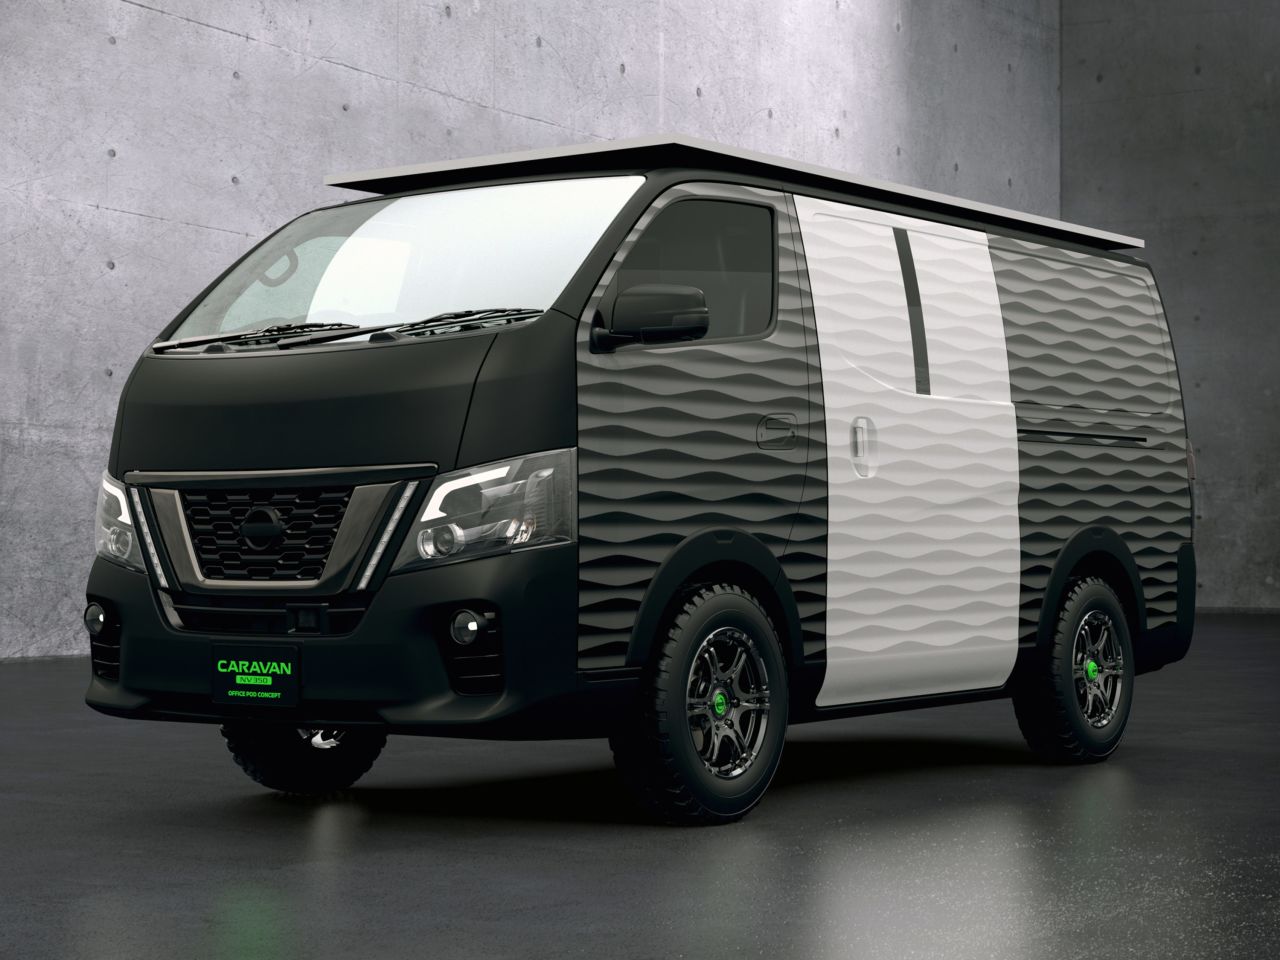 The concept design is based on Nissan's NV350 Caravan series.